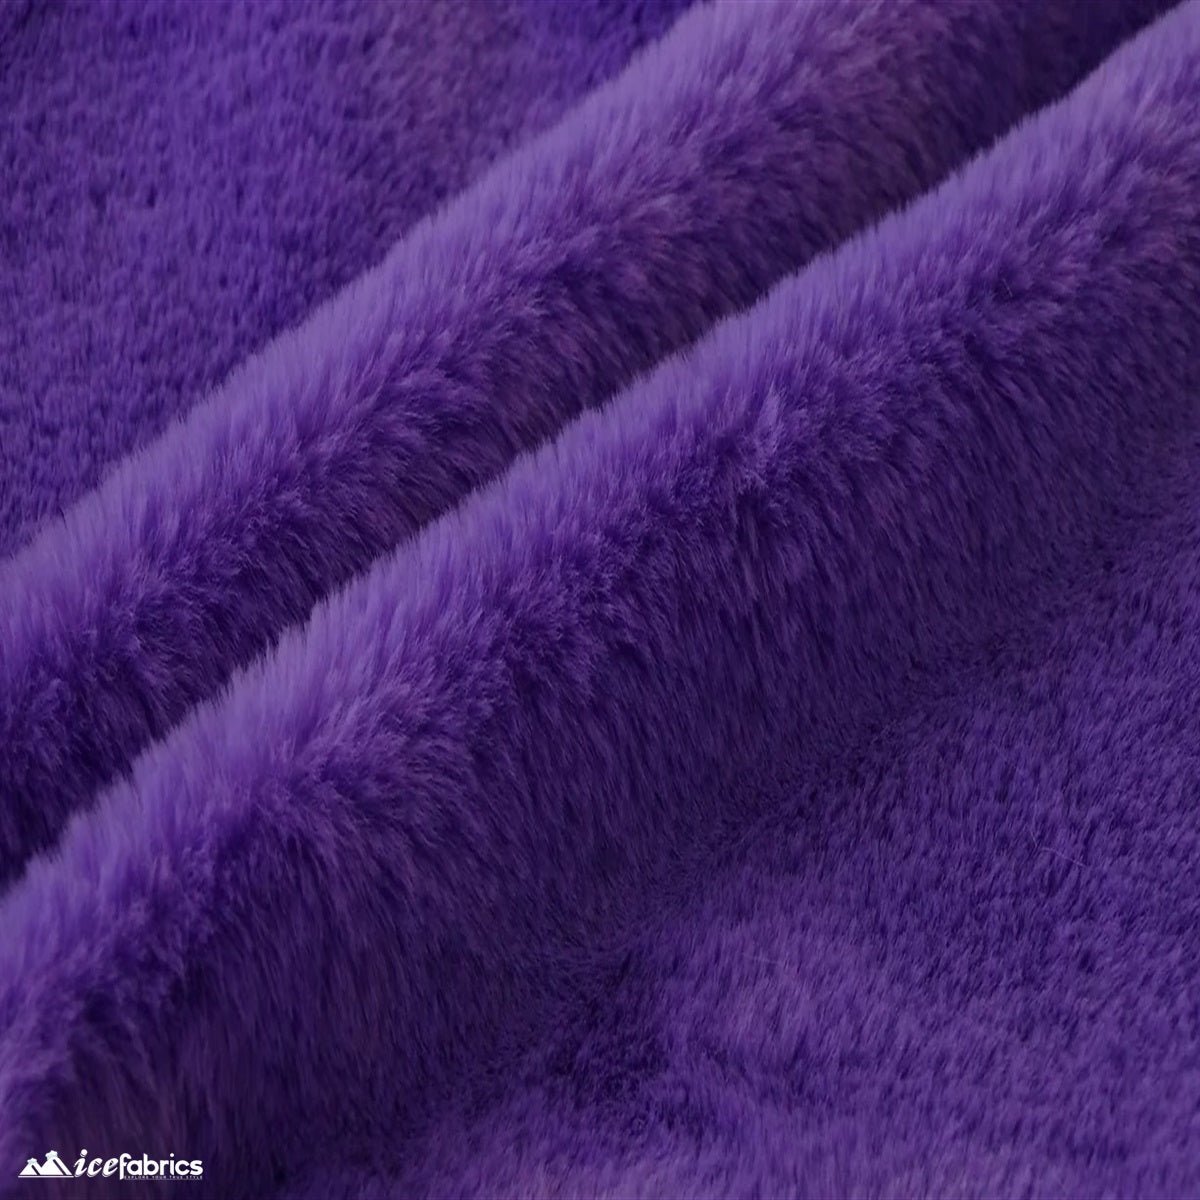 Bunny Thick Faux Fur Minky Fabric / Short Pile / Super SoftICE FABRICSICE FABRICSPurpleBy The Yard (60 inches Wide)Bunny Thick Faux Fur Minky Fabric / Short Pile / Super Soft ICE FABRICS Purple